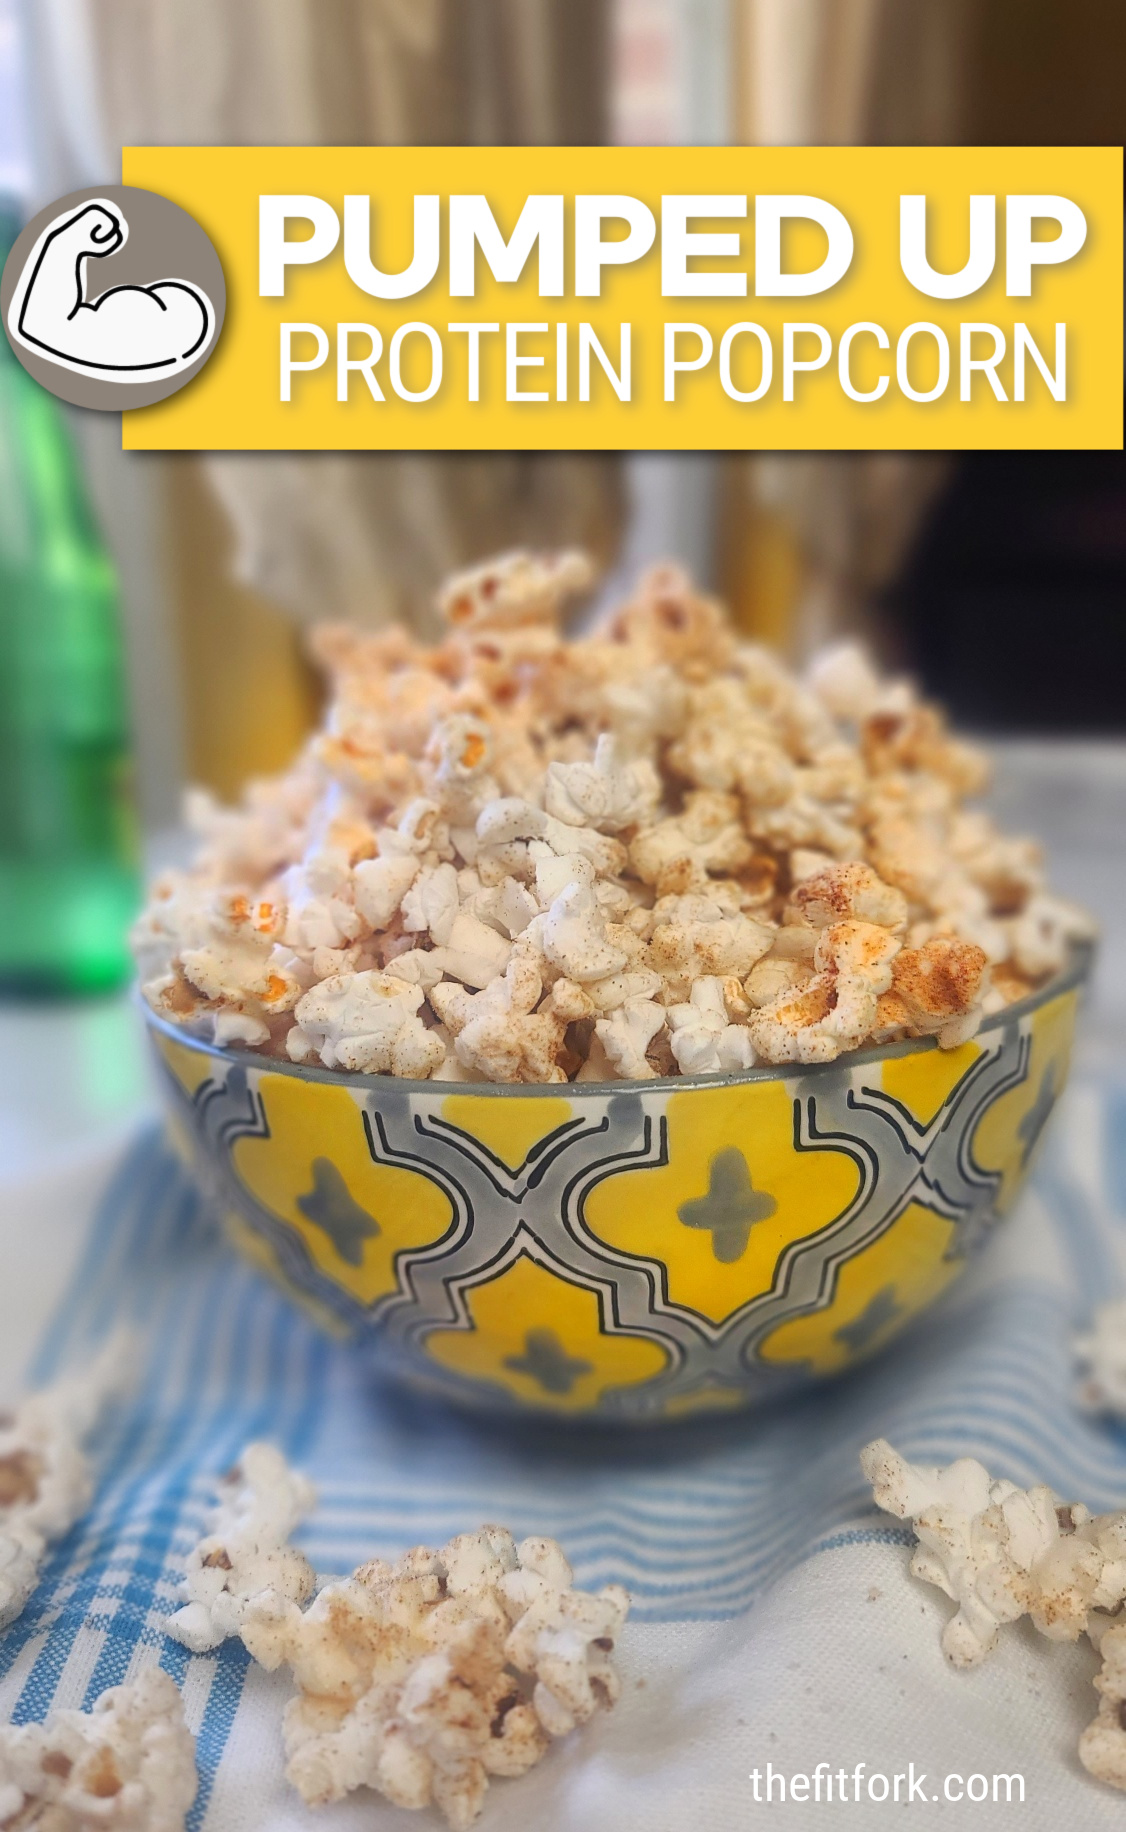 https://thefitfork.com/wp-content/uploads/2023/05/pumped-up-protein-popcorn-jen-vert-no-product-april-2023-pin.jpg